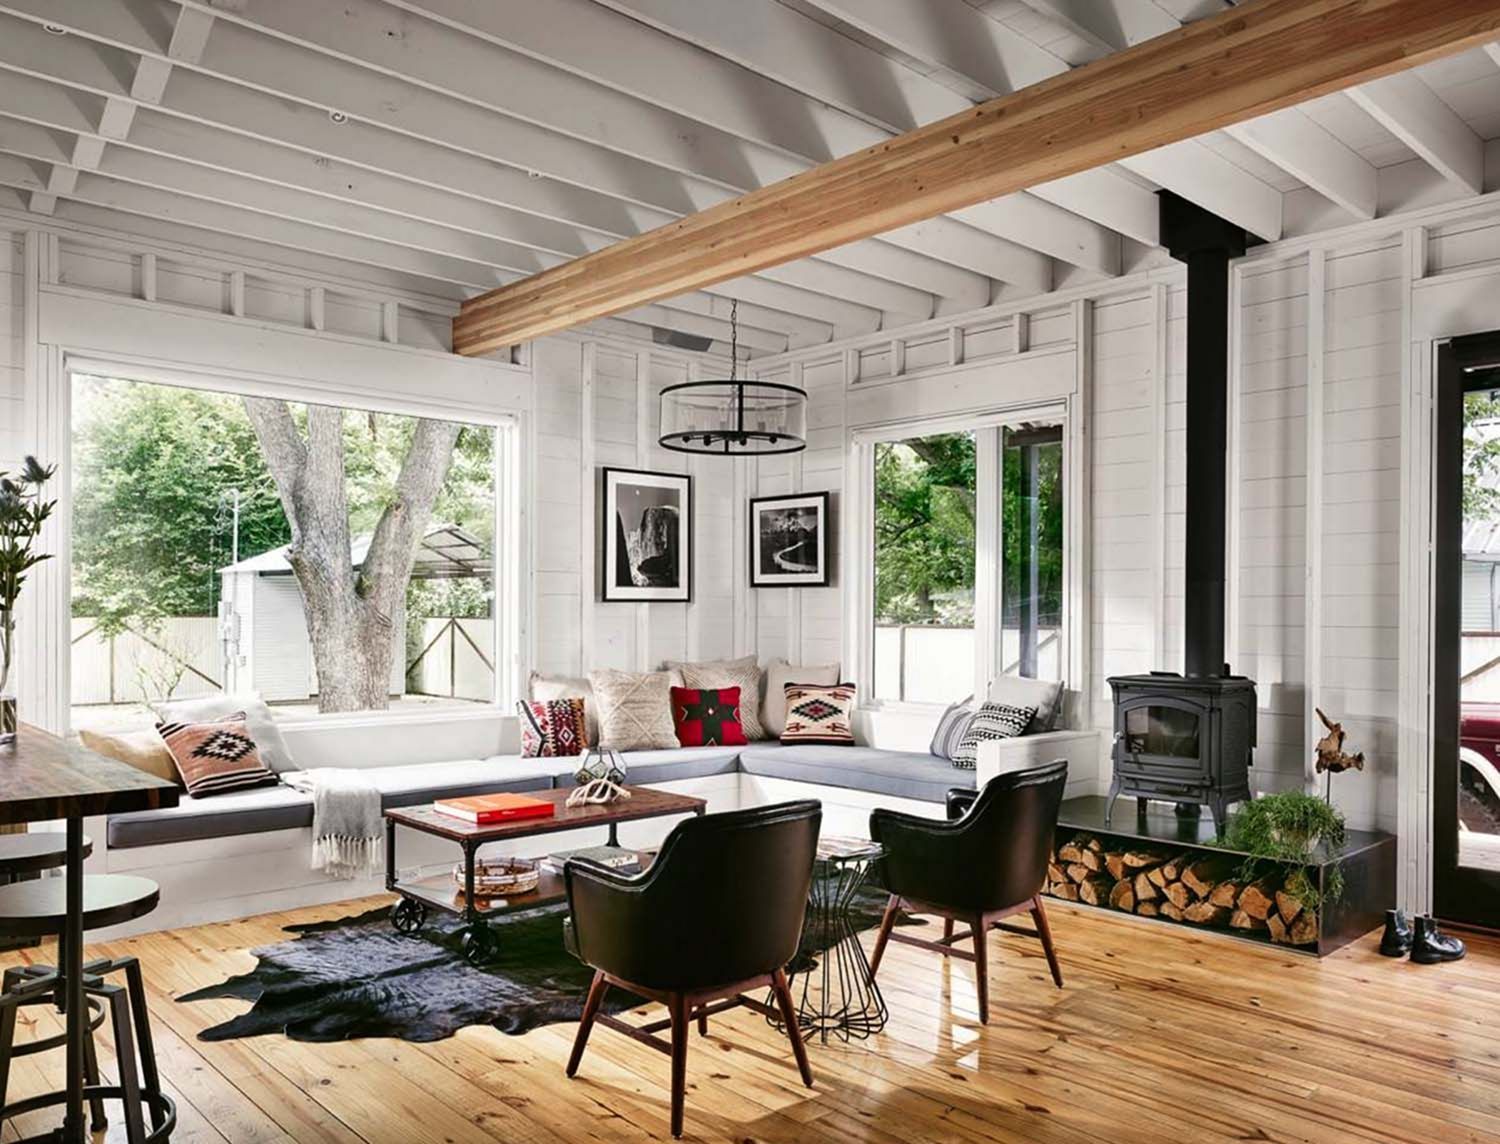 7 Popular Interior Design Styles For Prefab Homes